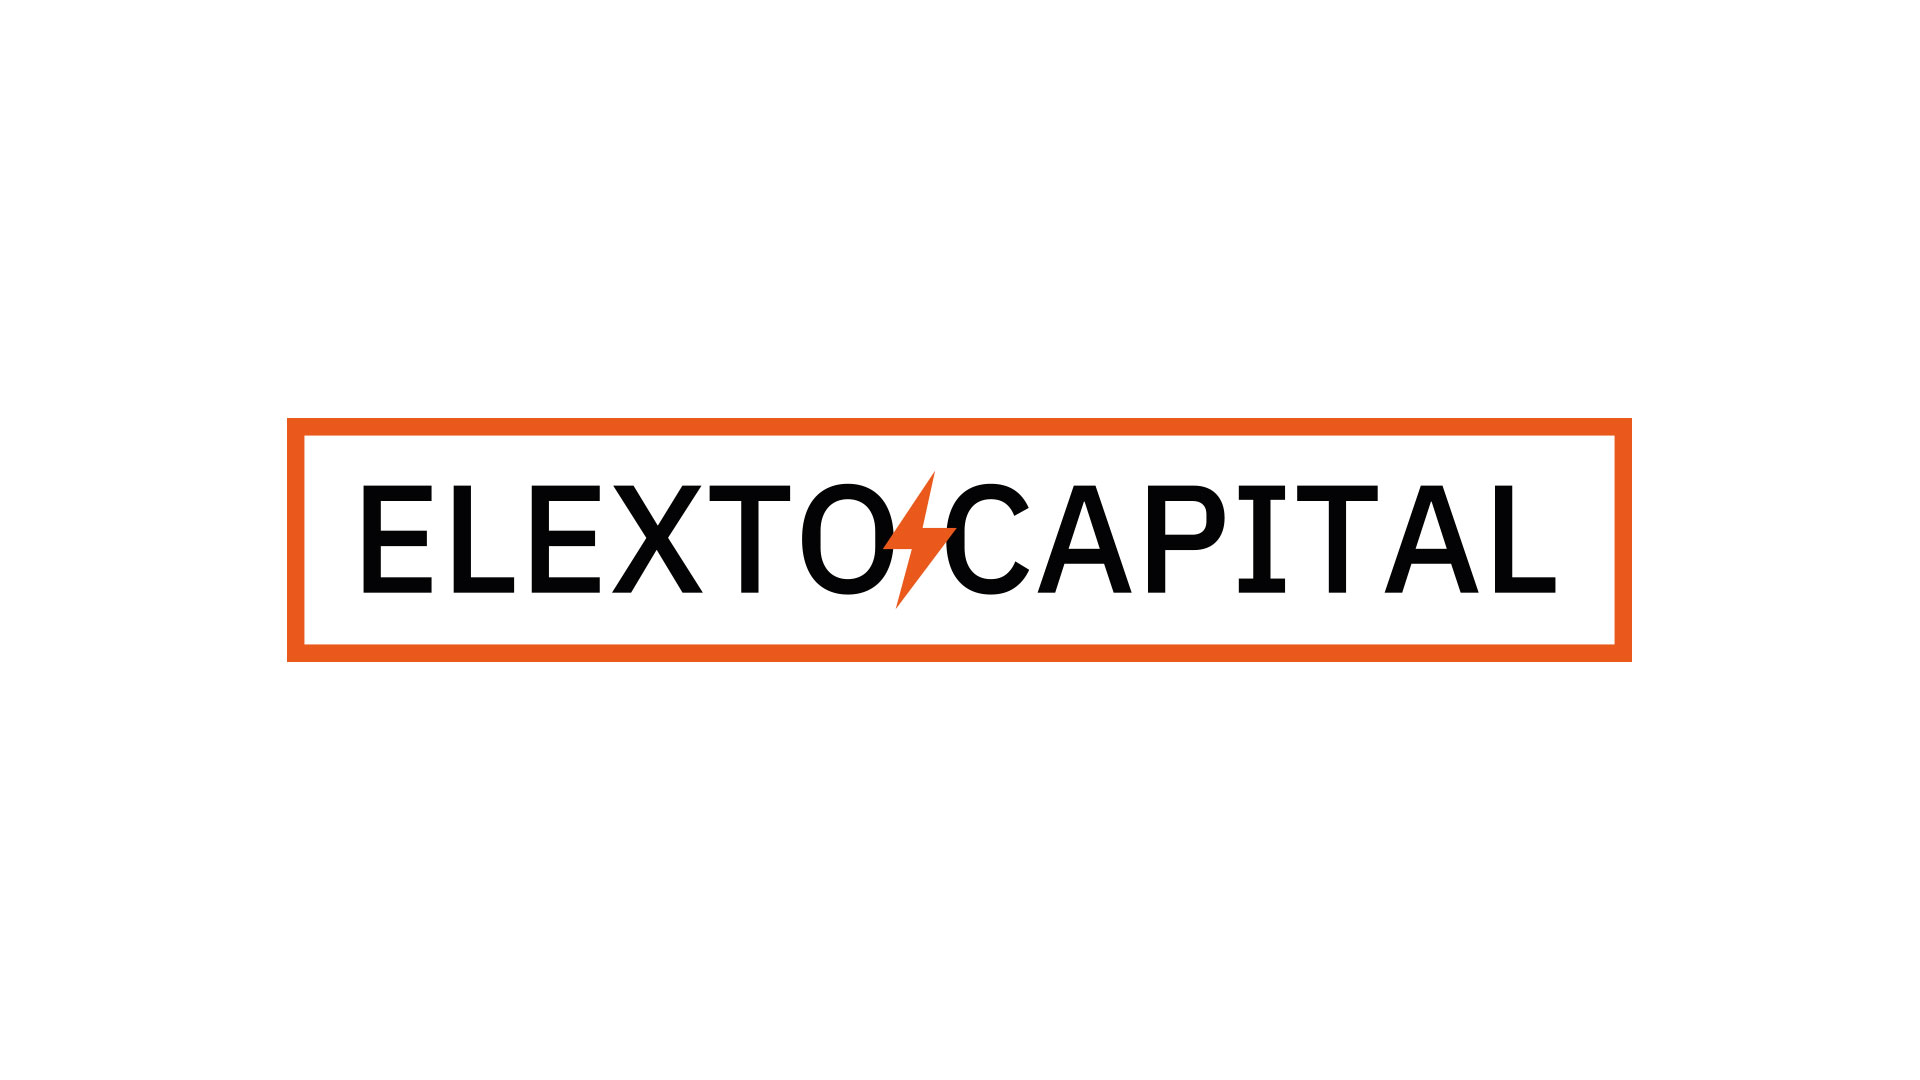 Elexto capital logo | Webdesign Blog